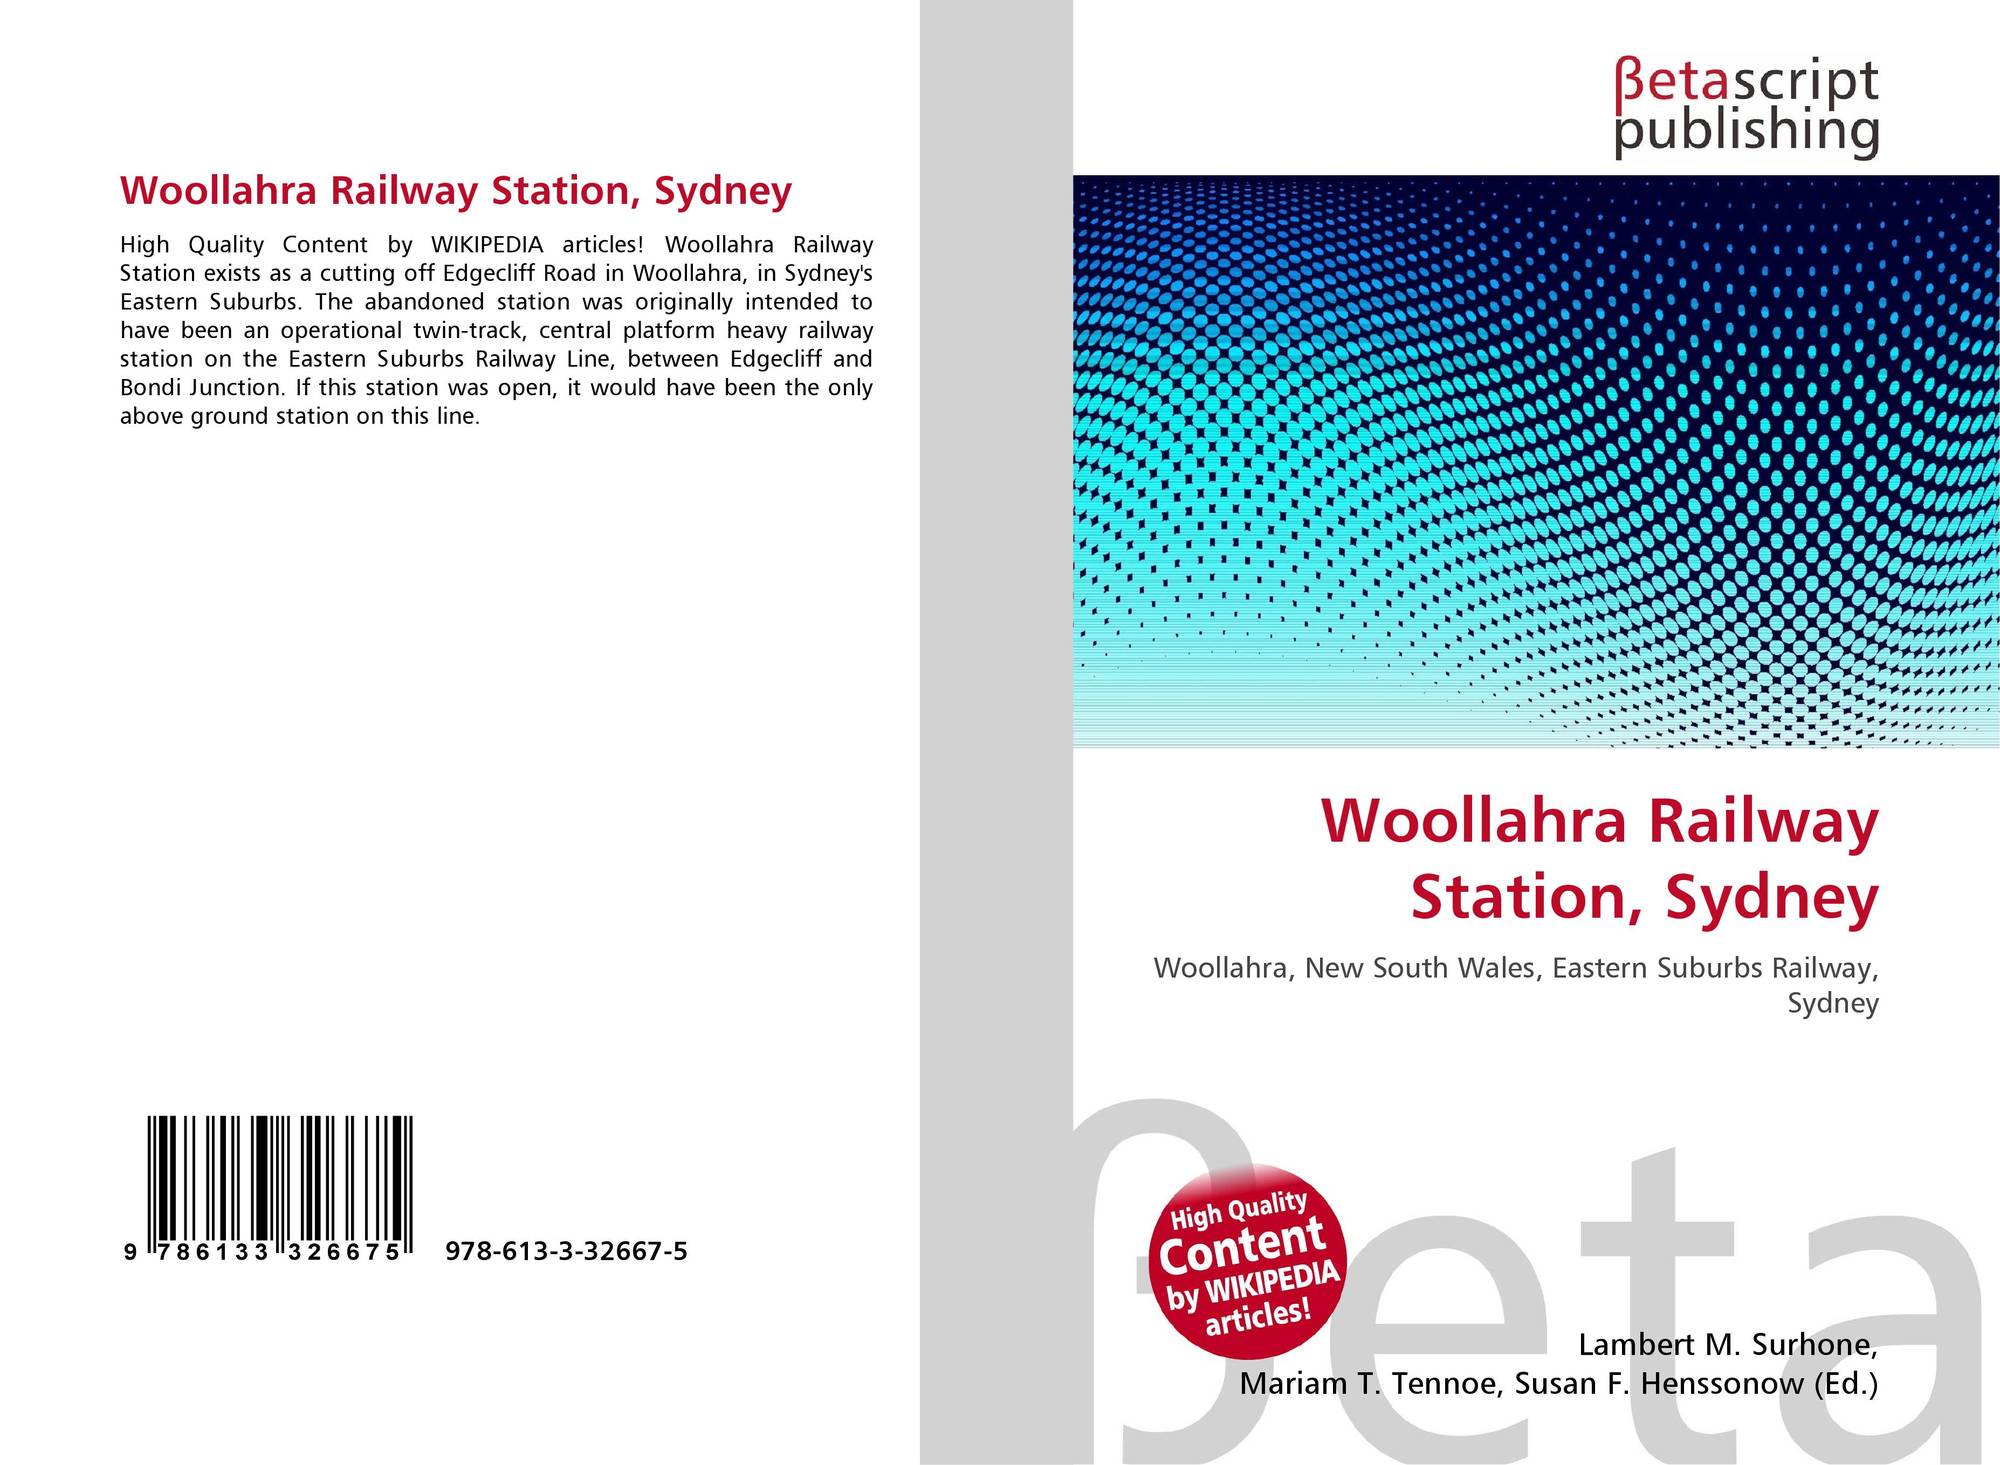 Woollahra Railway Station Sydney 978 613 3 32667 5 6133326670 9786133326675